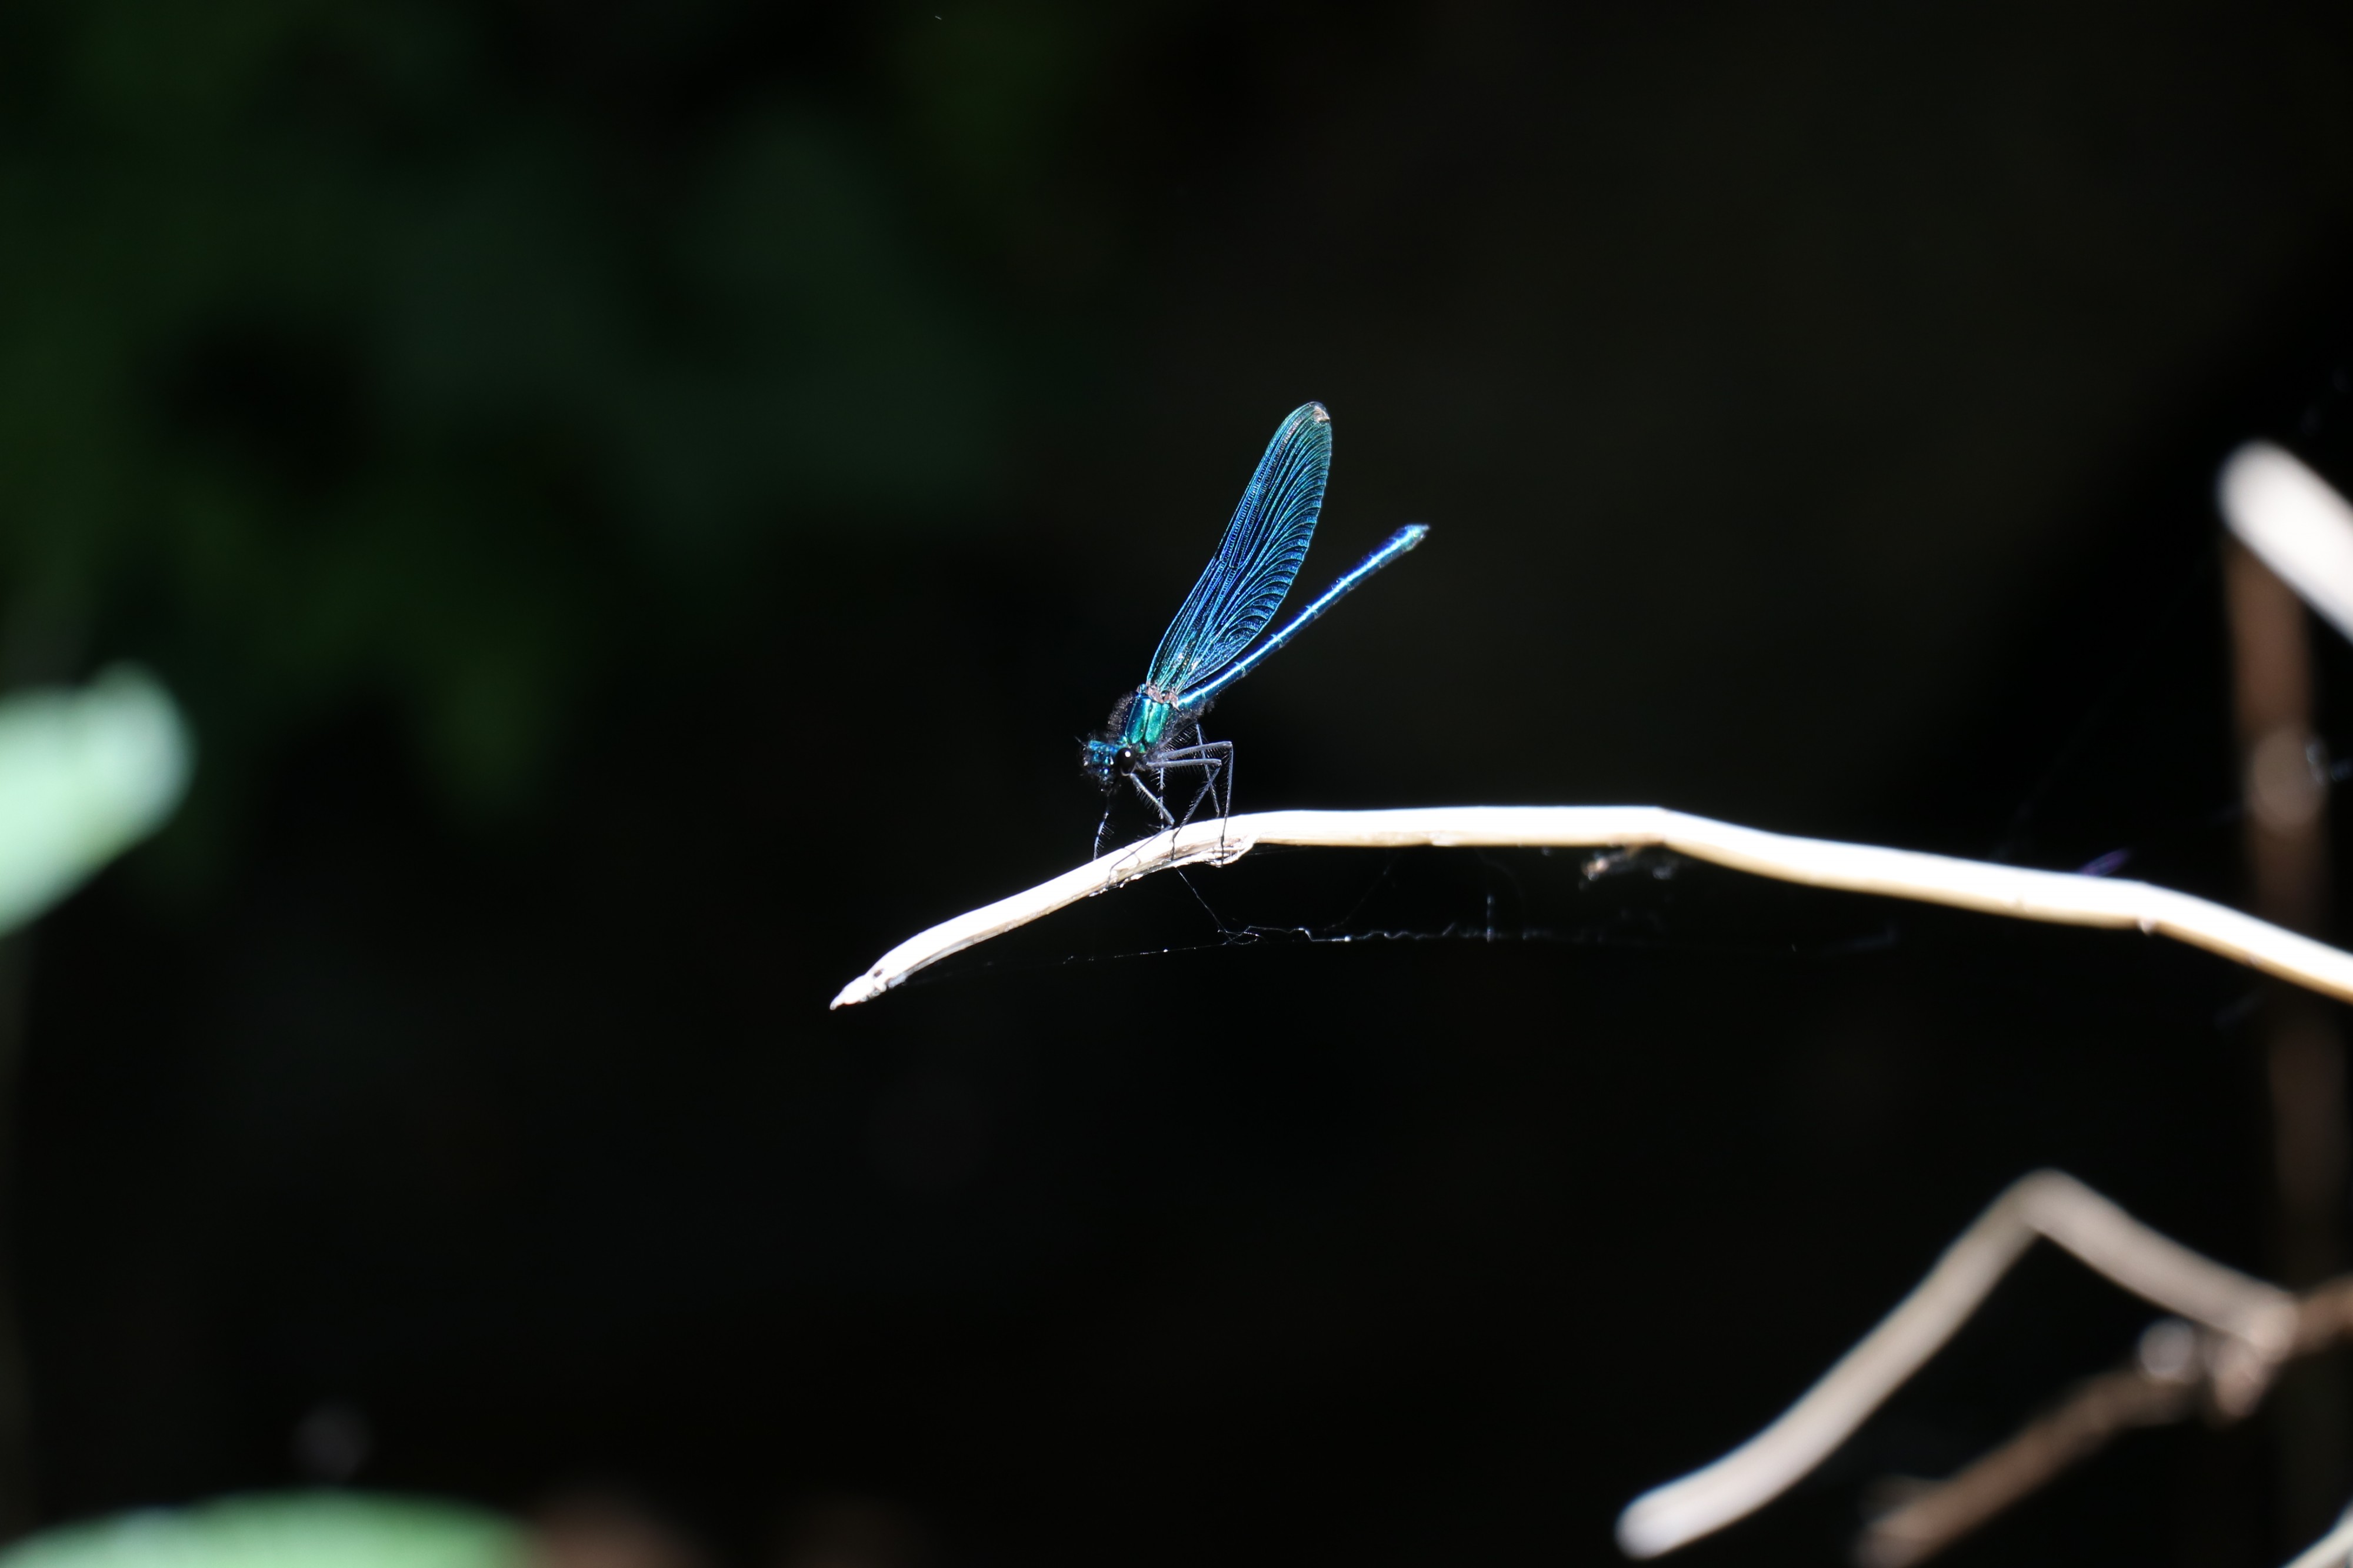 Dragonfly blue